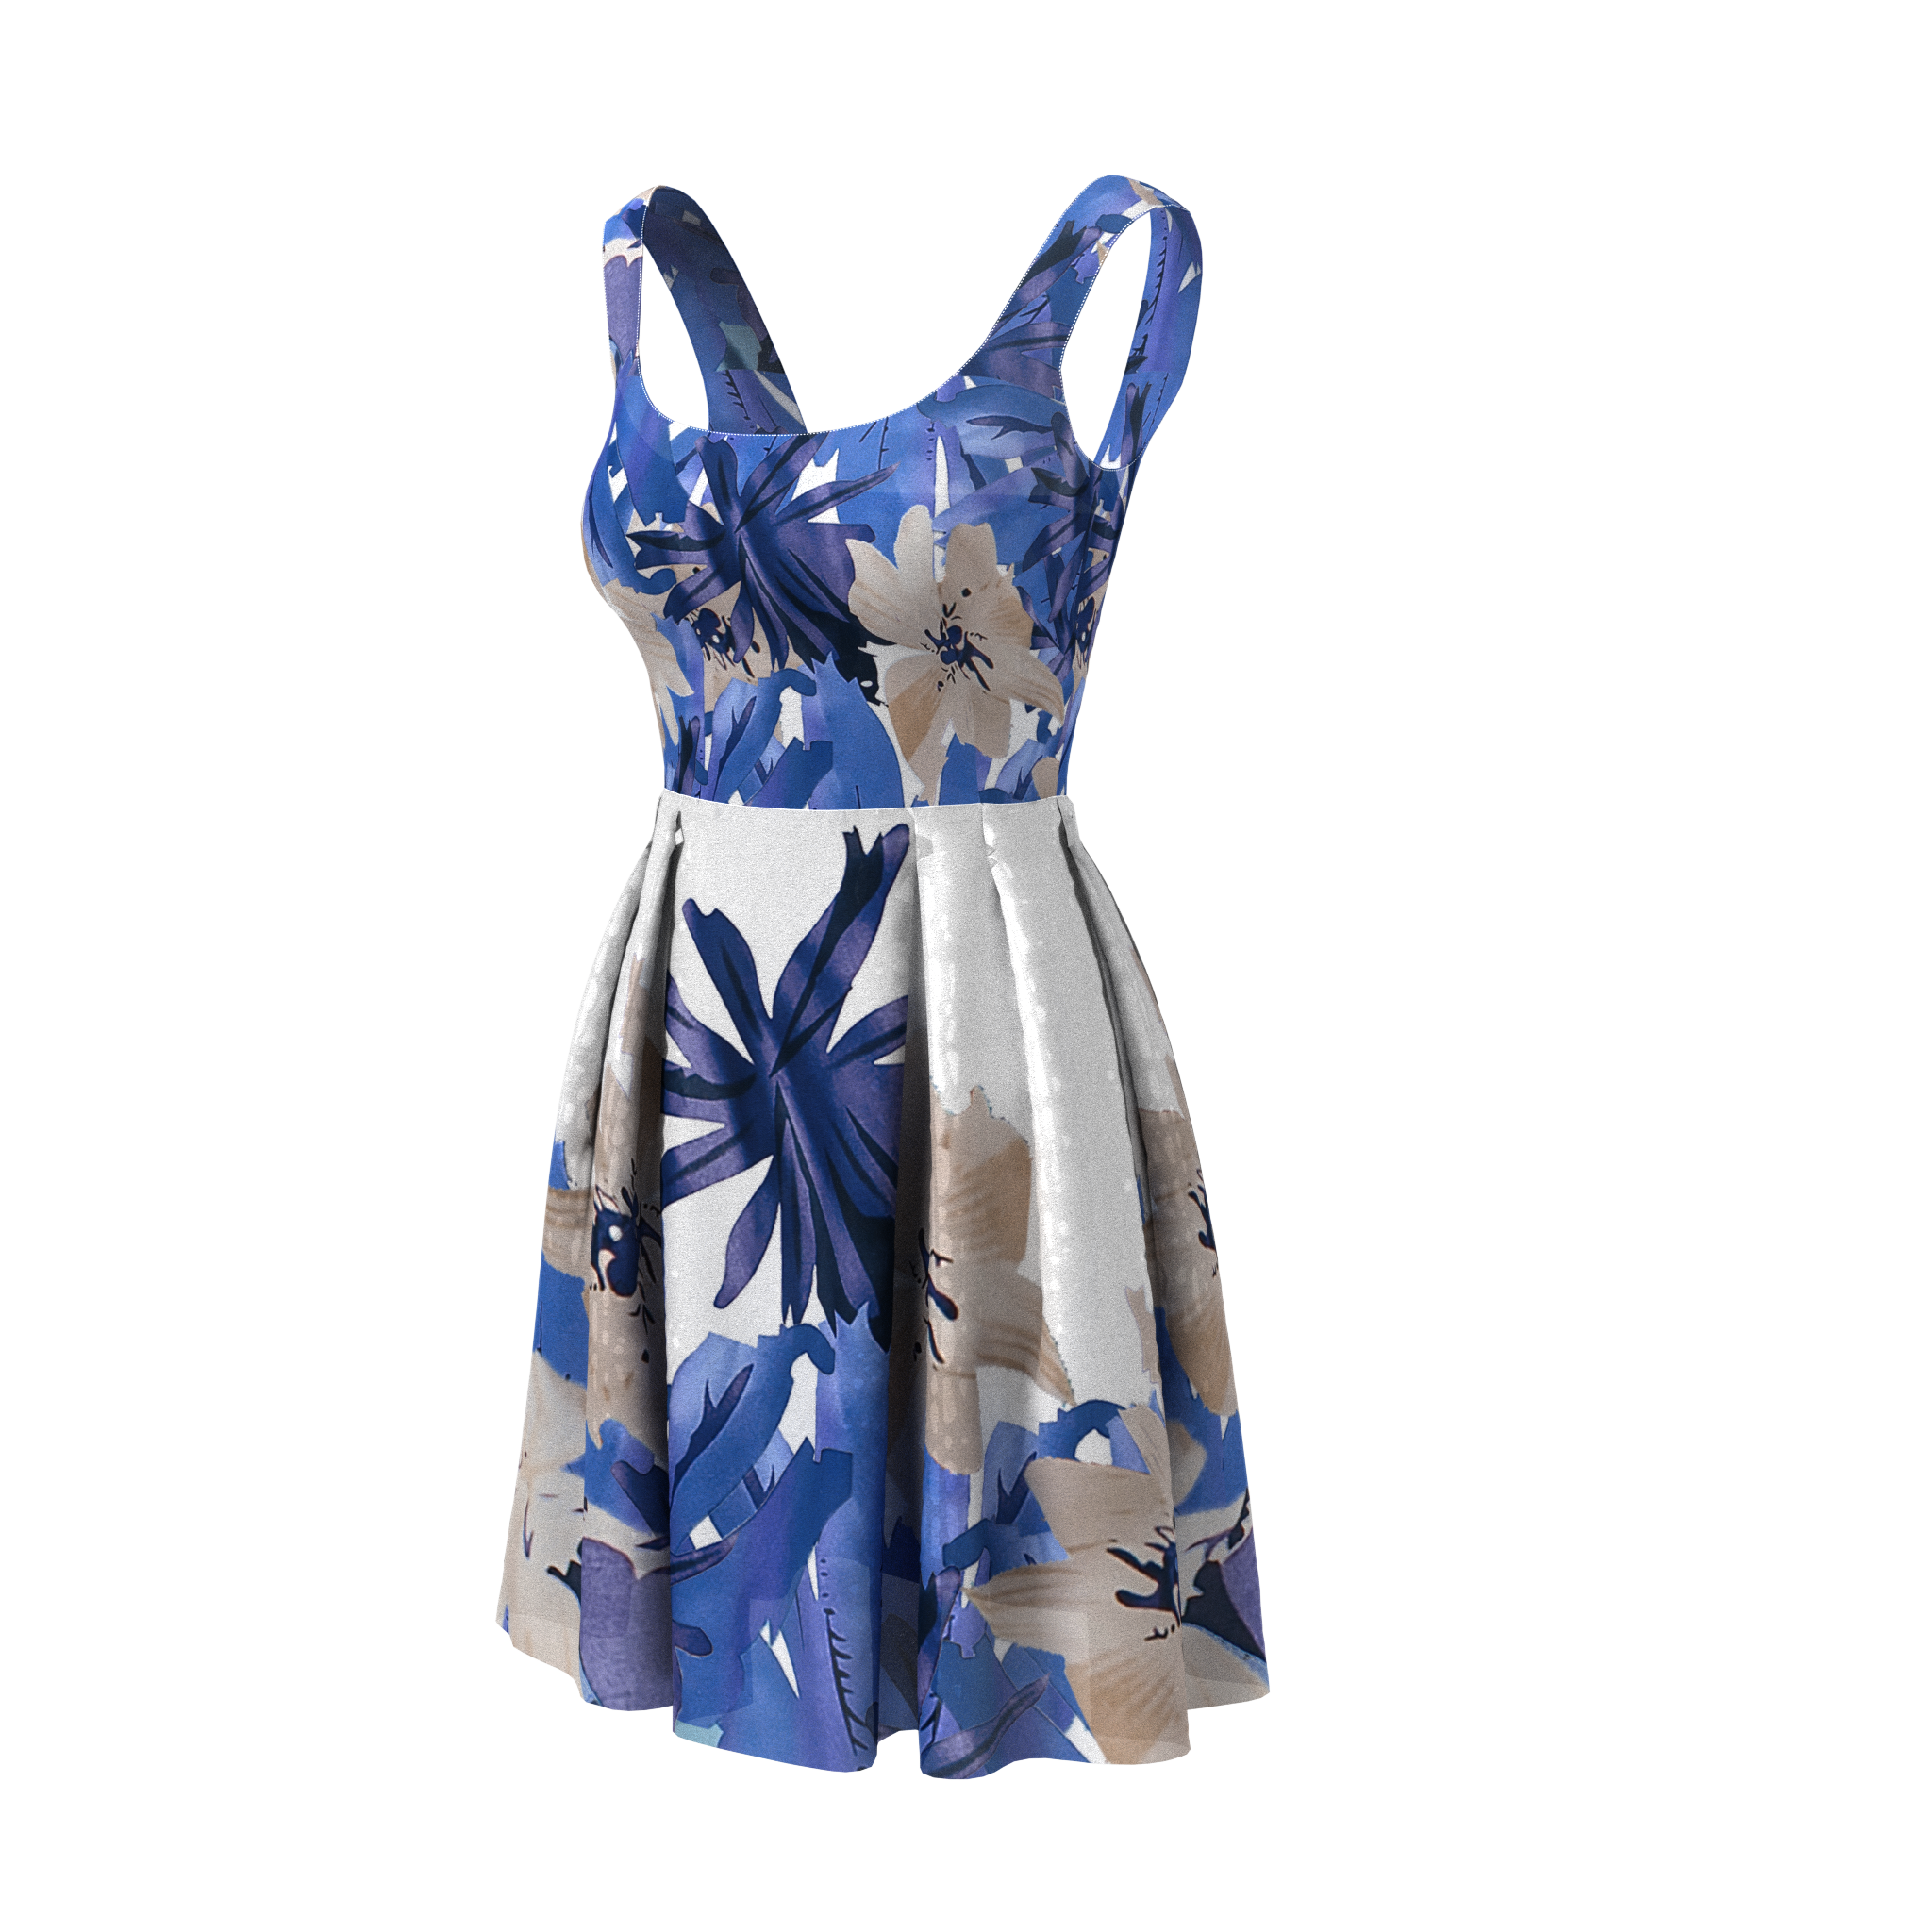 Optitex 3D Dress 